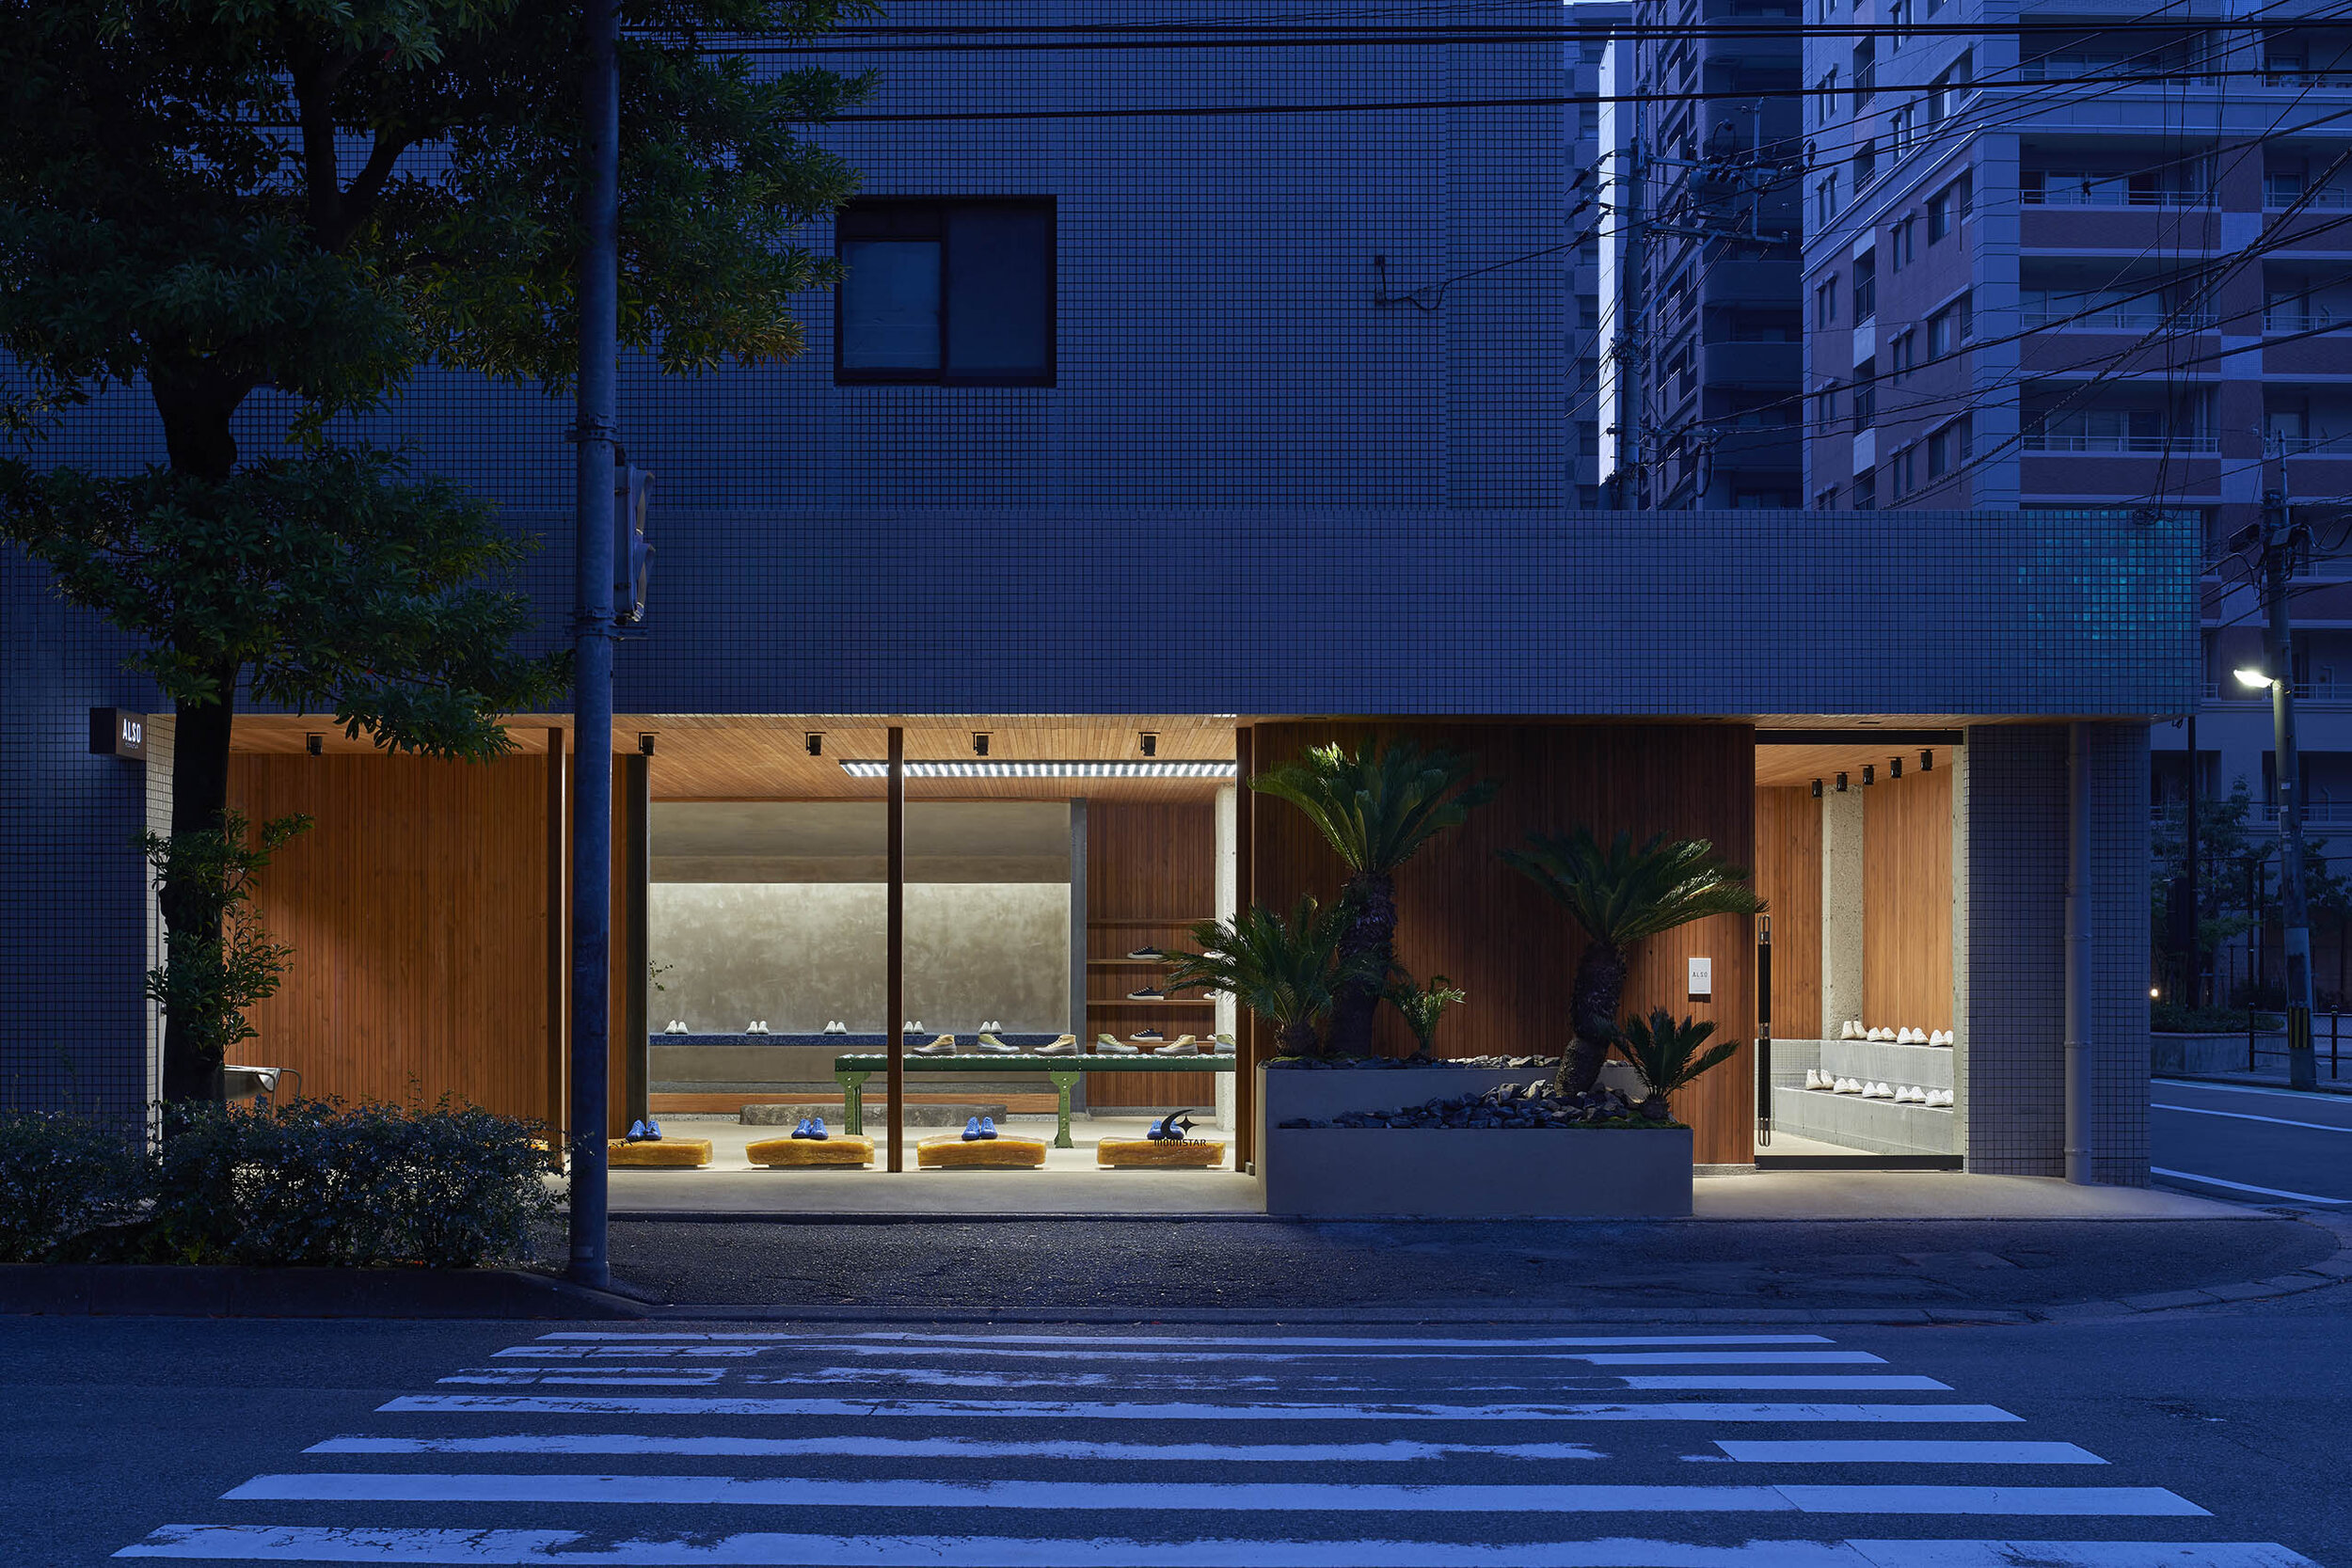 toru-shimokawa-architects-also-moonstar-interior-design-magazine-idreit-02.jpg